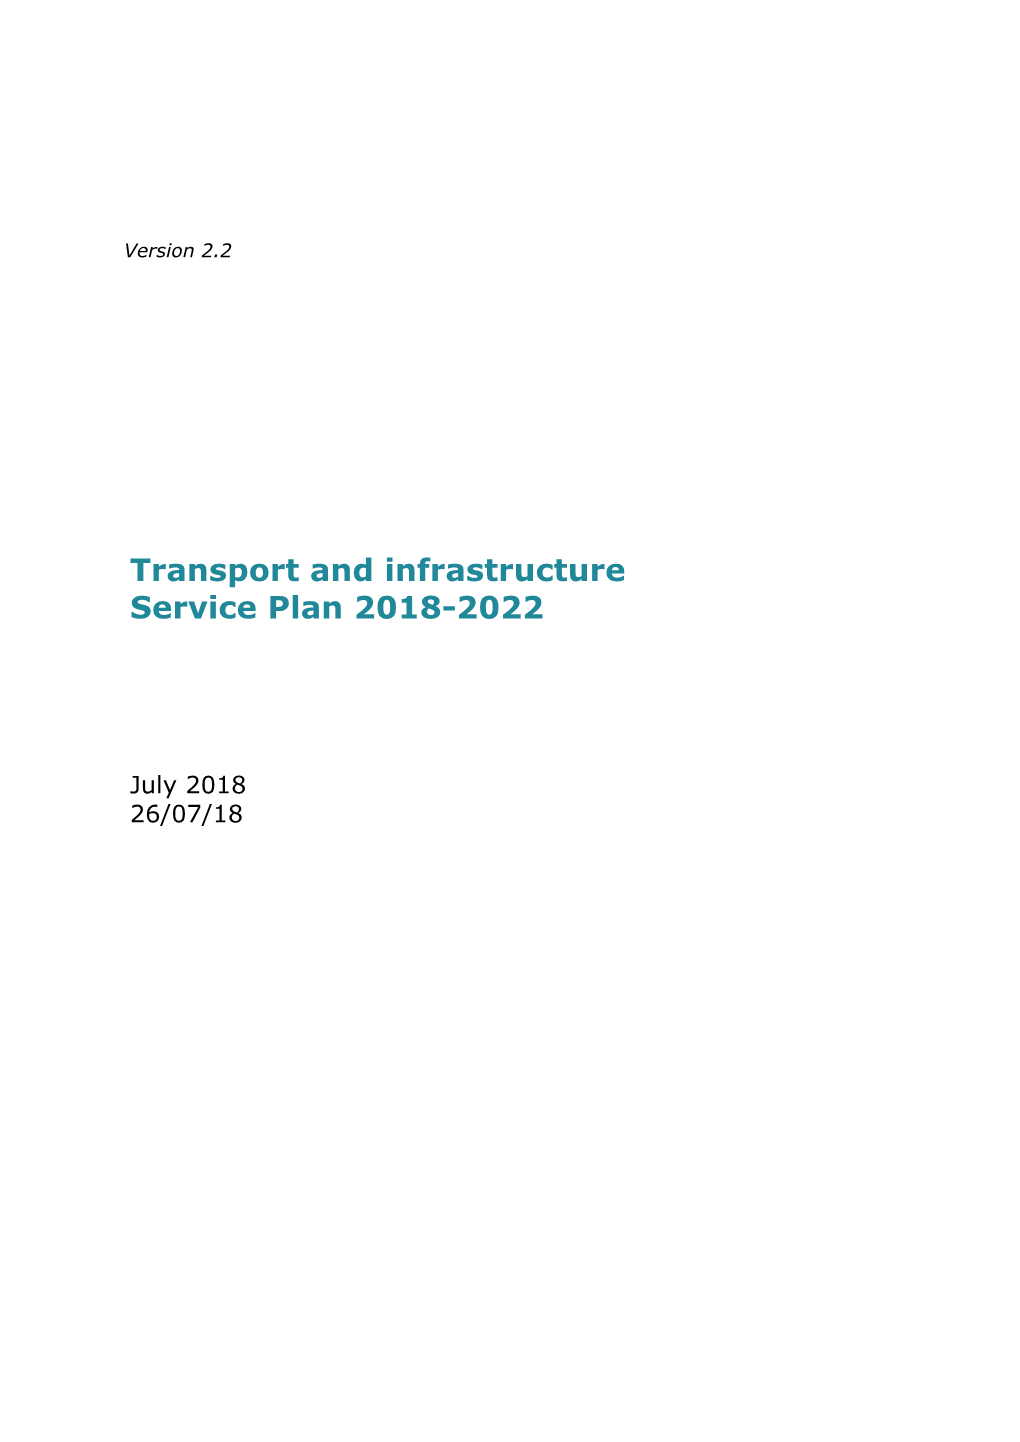 Transport Service Plan 2018-22